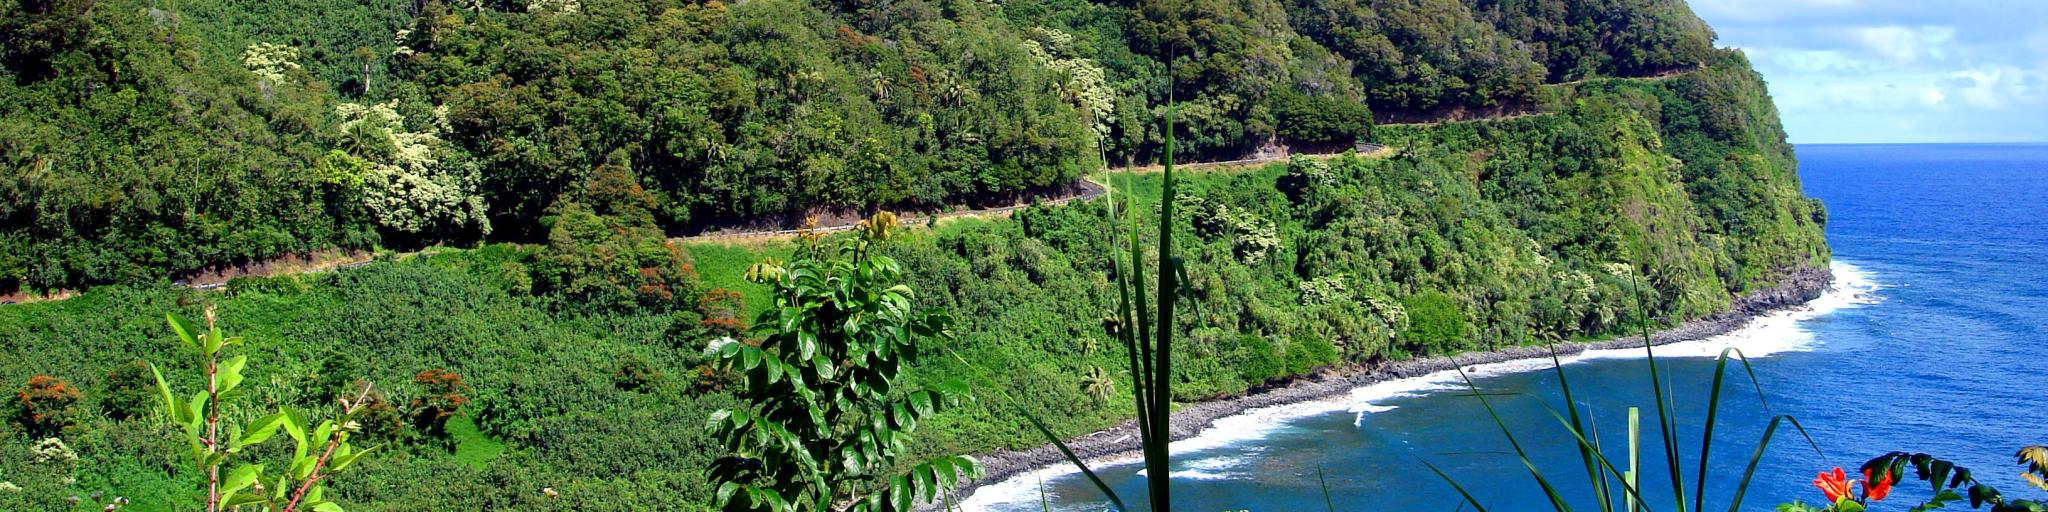 Winding nature of Road to Hana, nestled in the lush hillside with coastal views, Maui, Hawaii